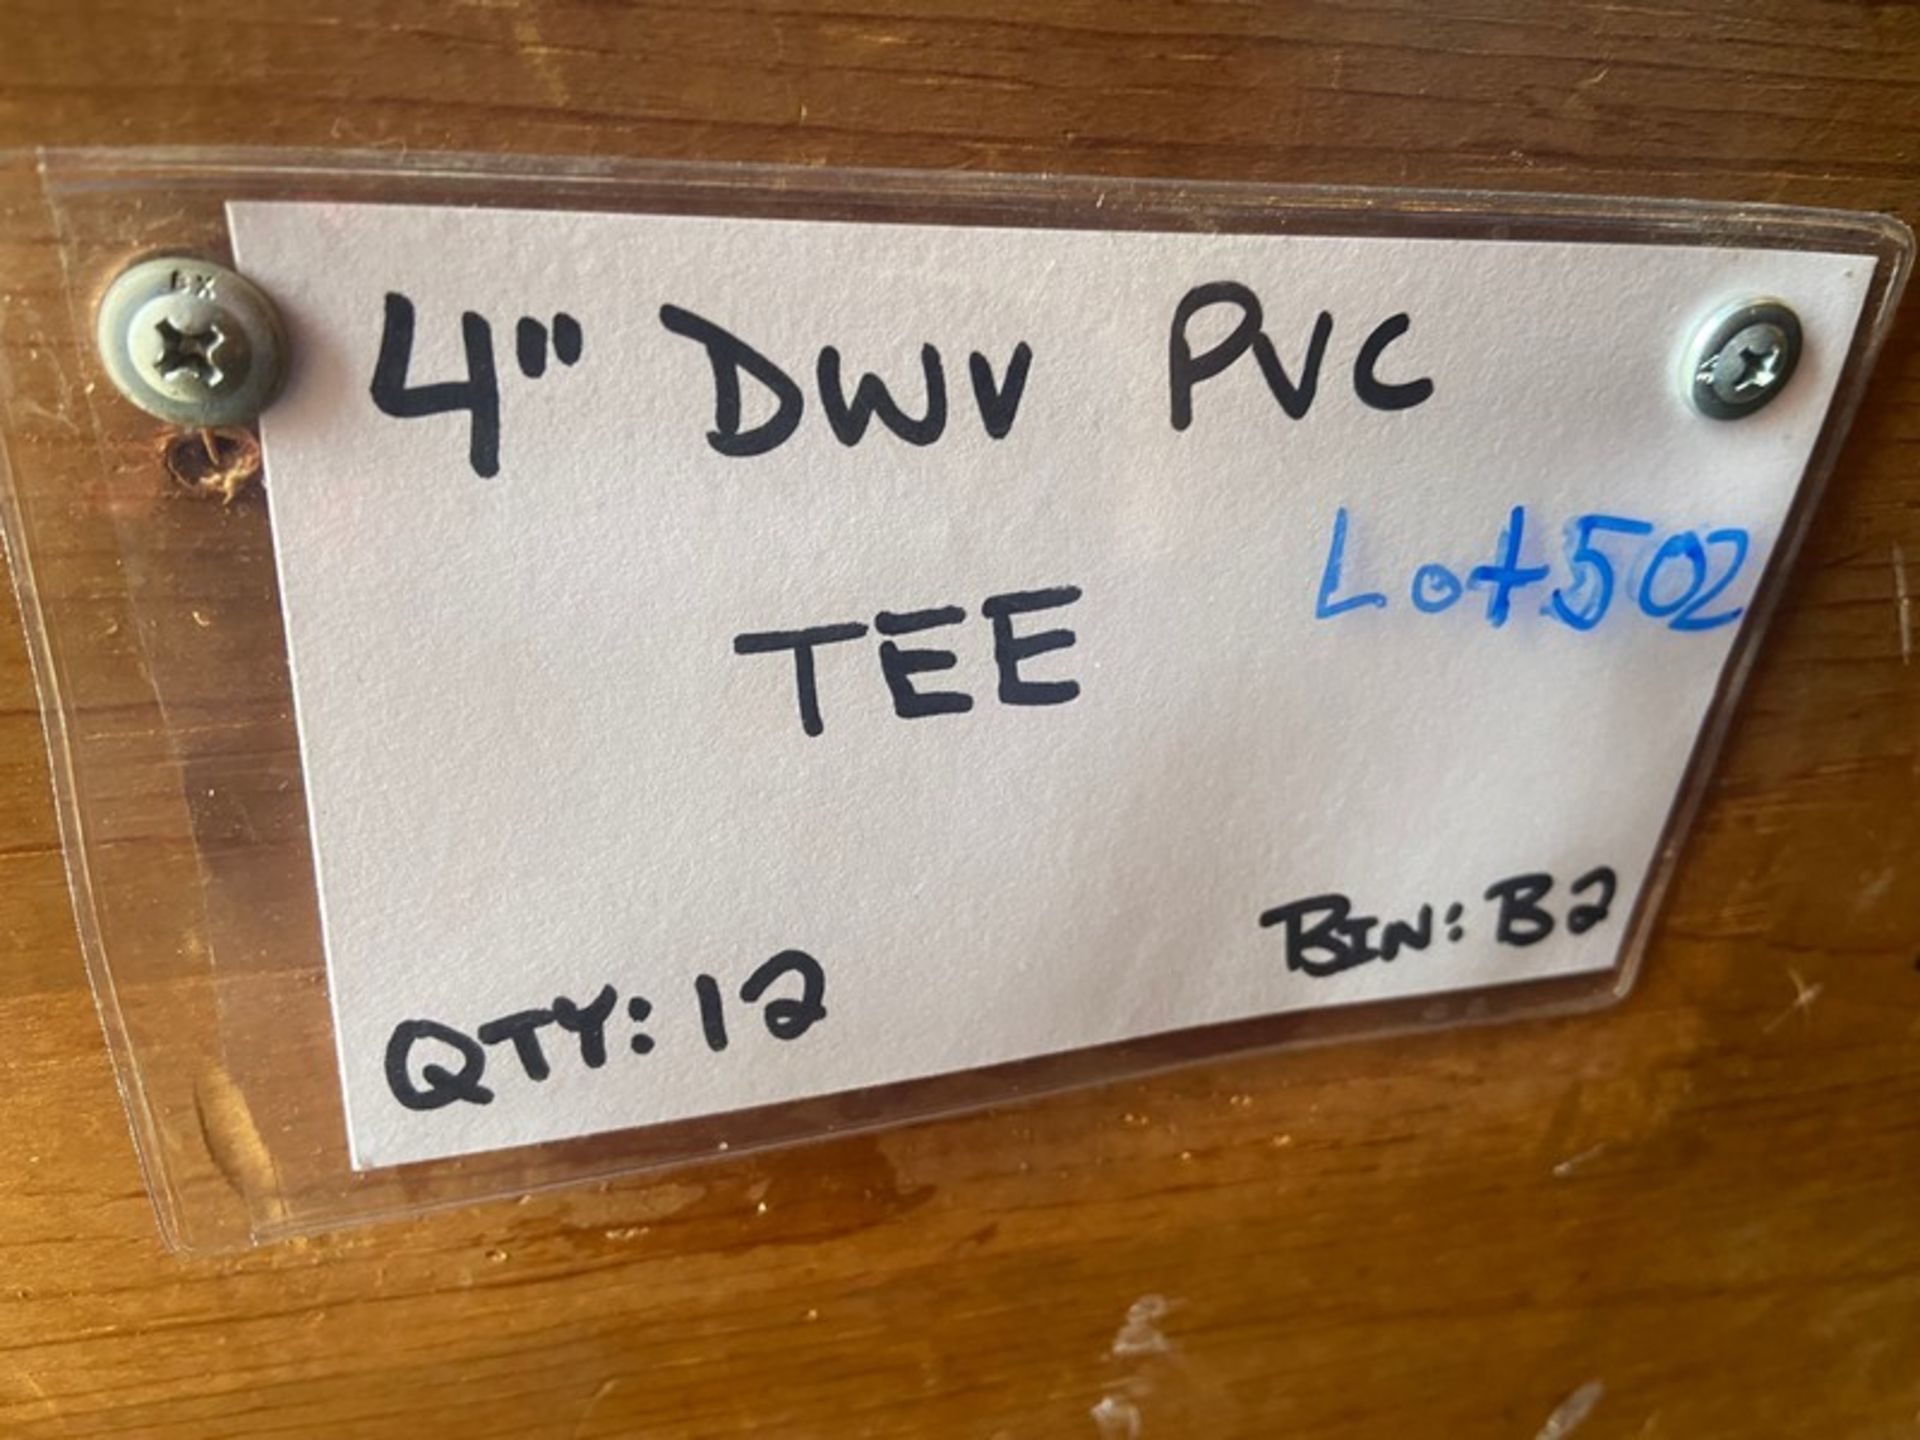 4" DWV PVC TEE (Bin: B2) (Trailer #5) (LOCATED IN MONROEVILLE, PA) - Image 2 of 4